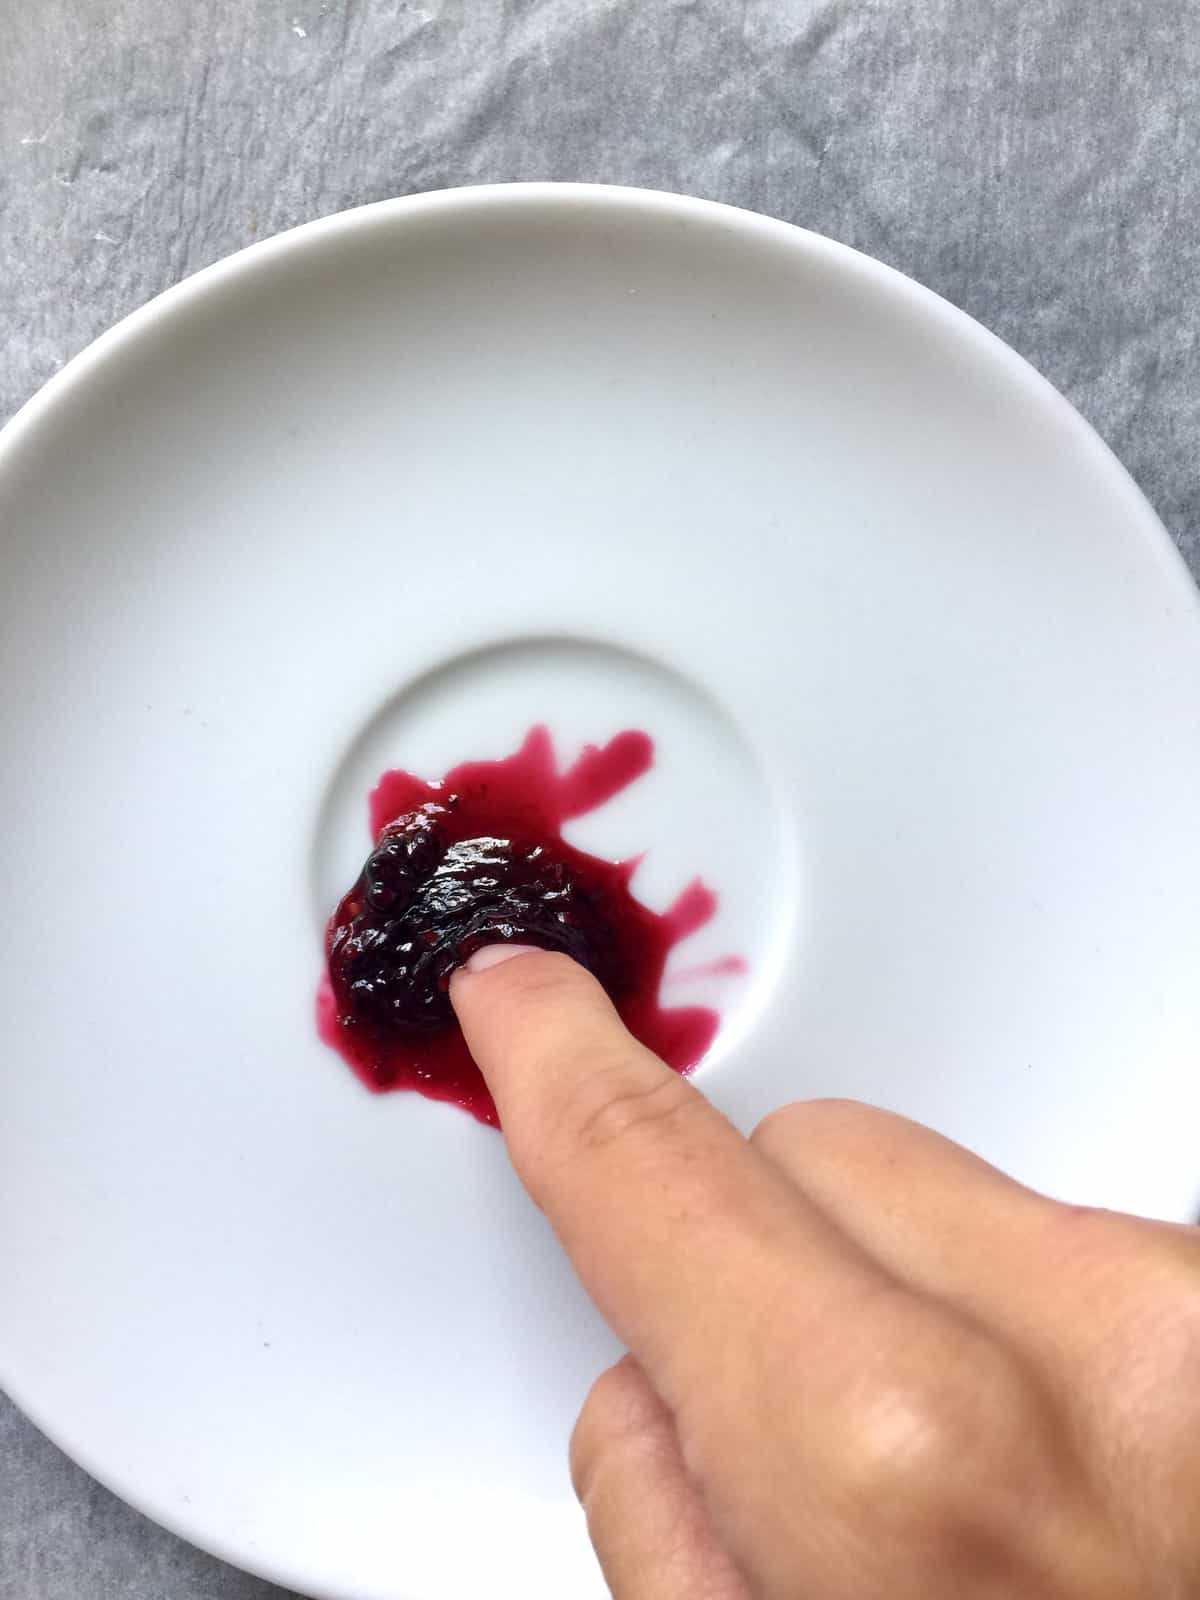 Finger pushing jam on a plate.